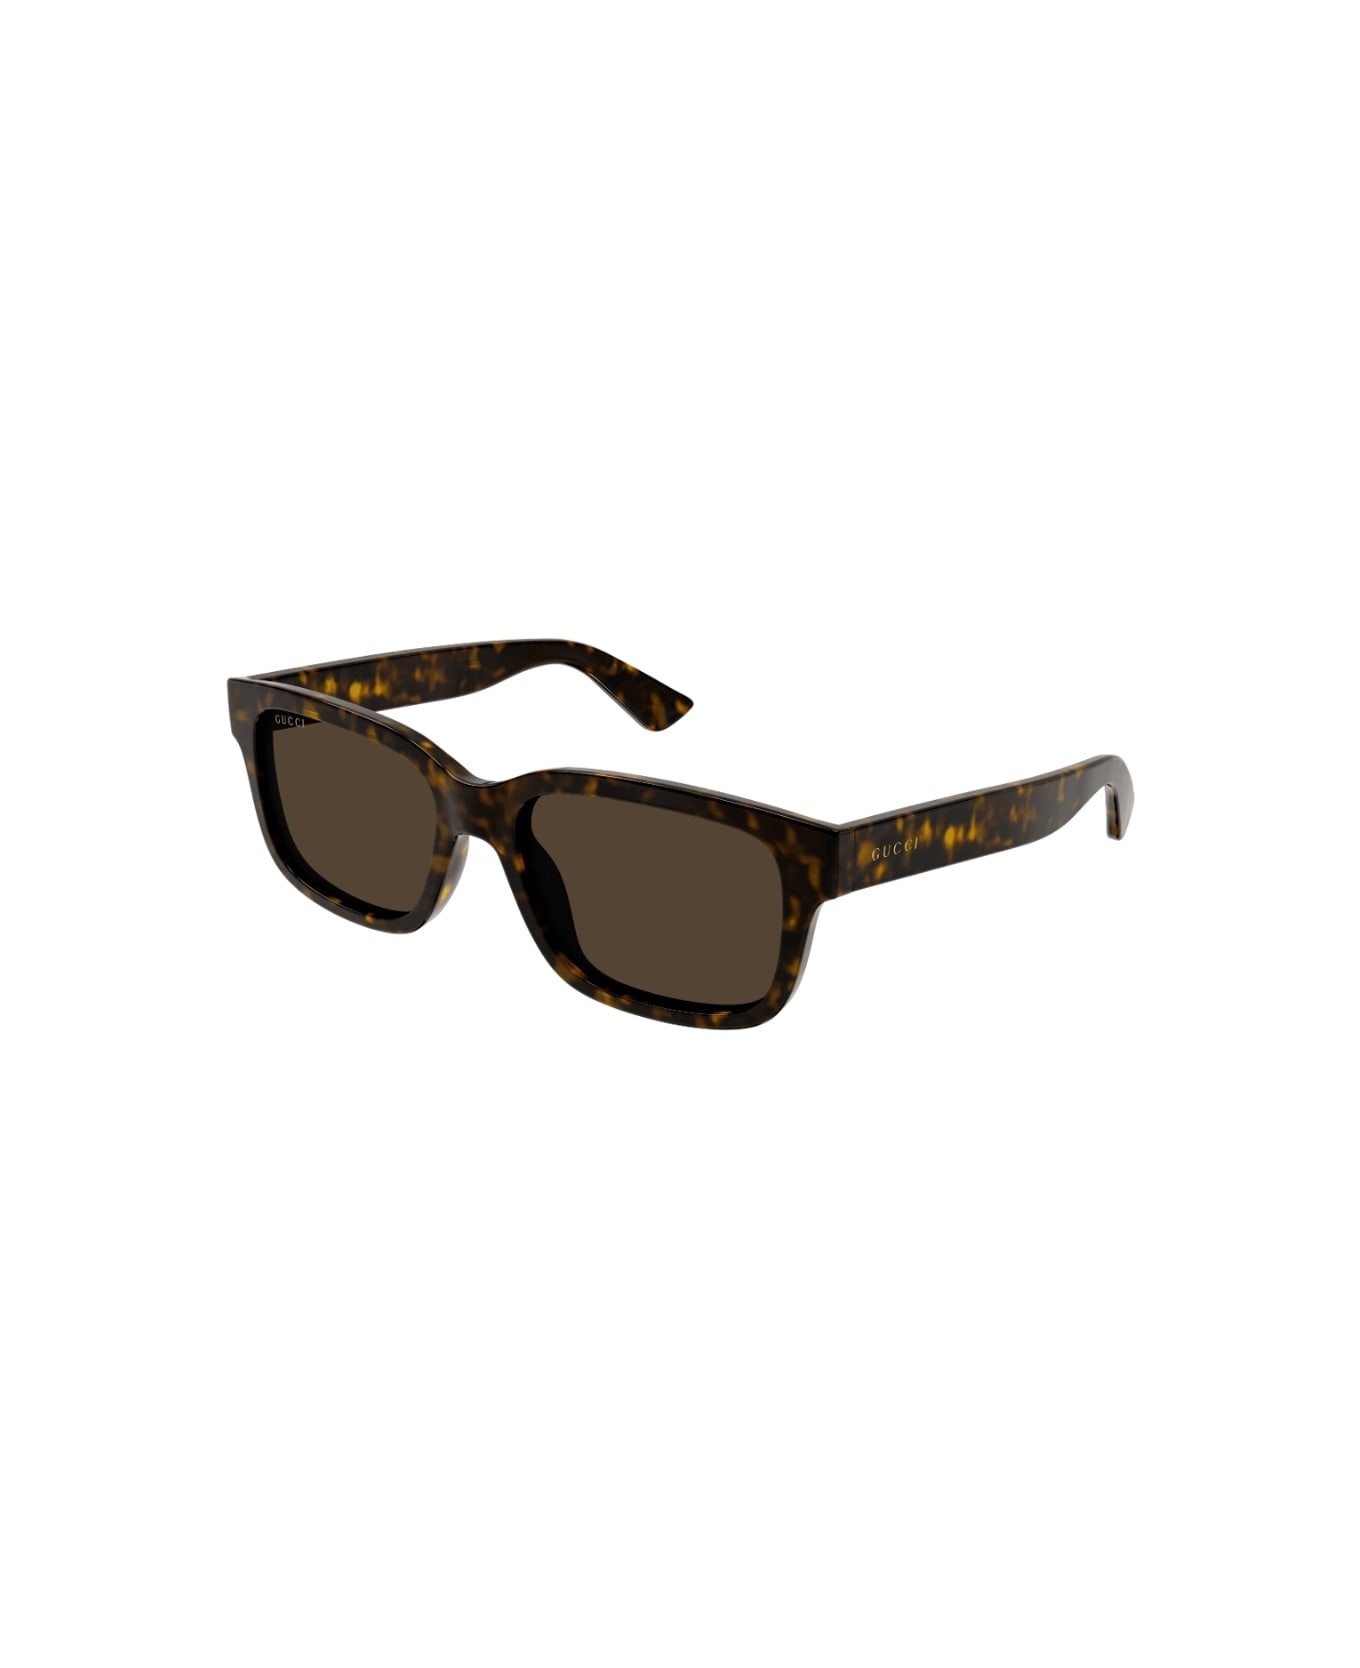 Gucci Eyewear GG1583s 002 Sunglasses サングラス